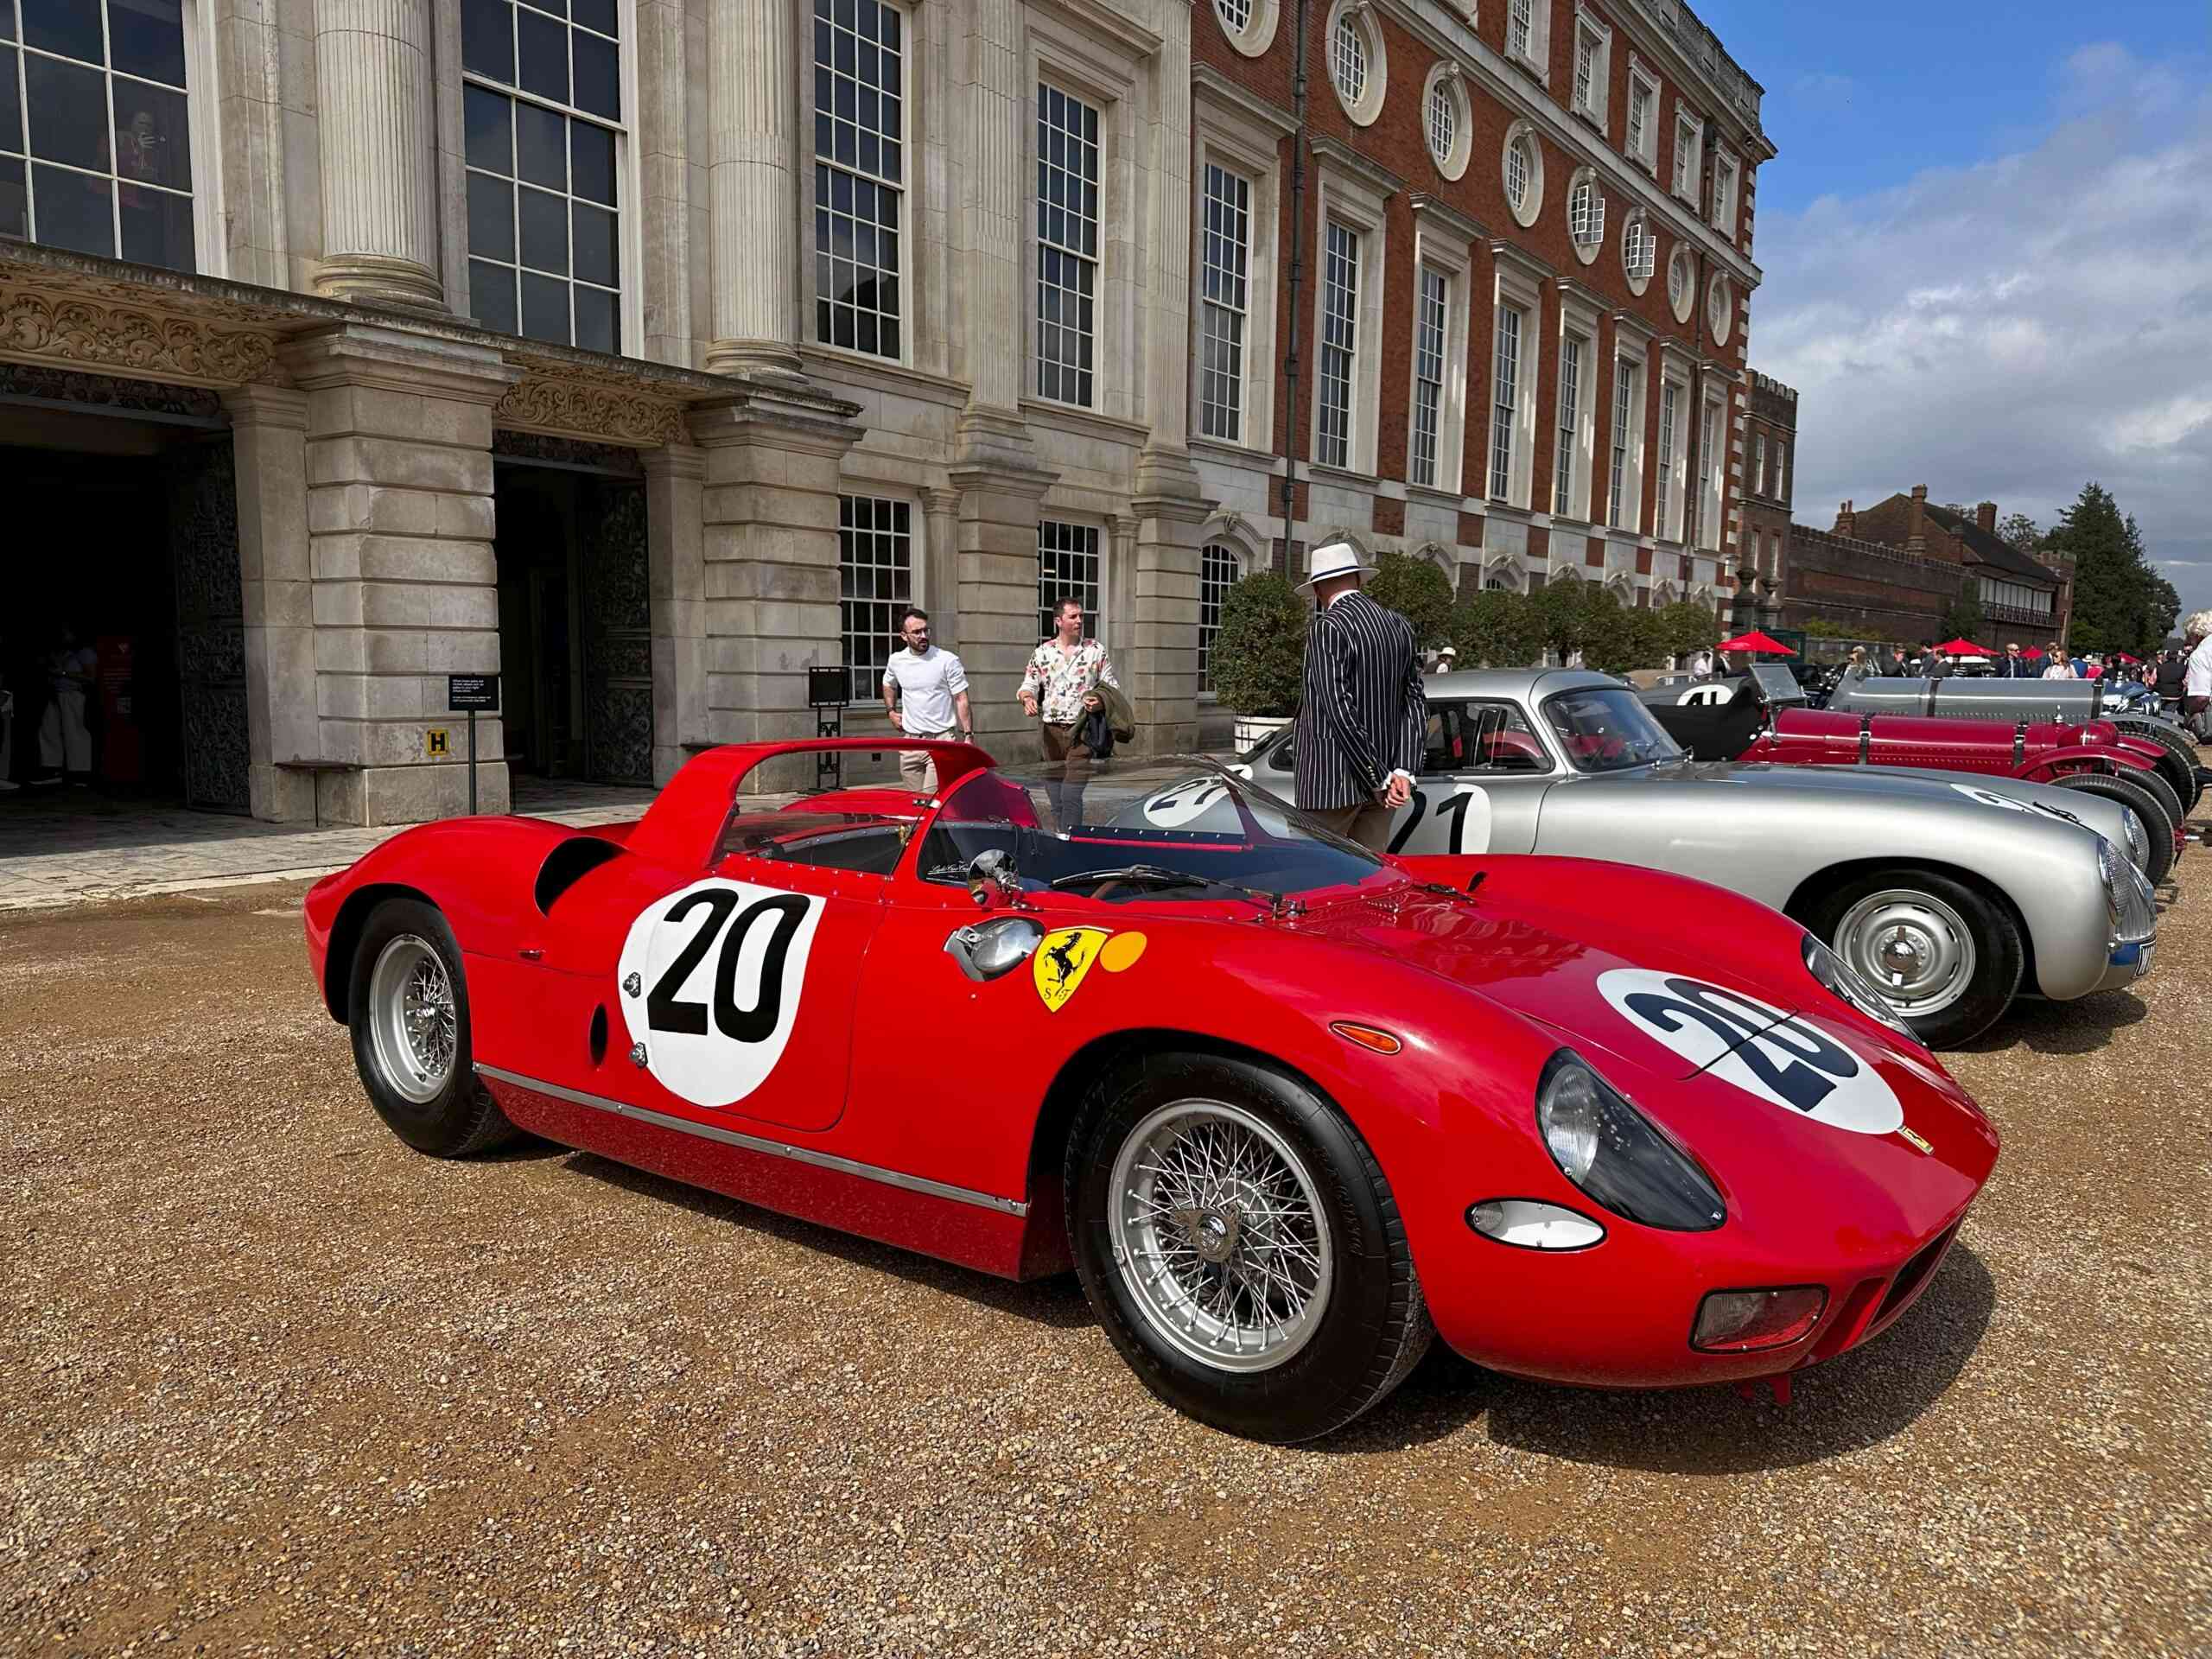 Le Mans racing car: Ferrari